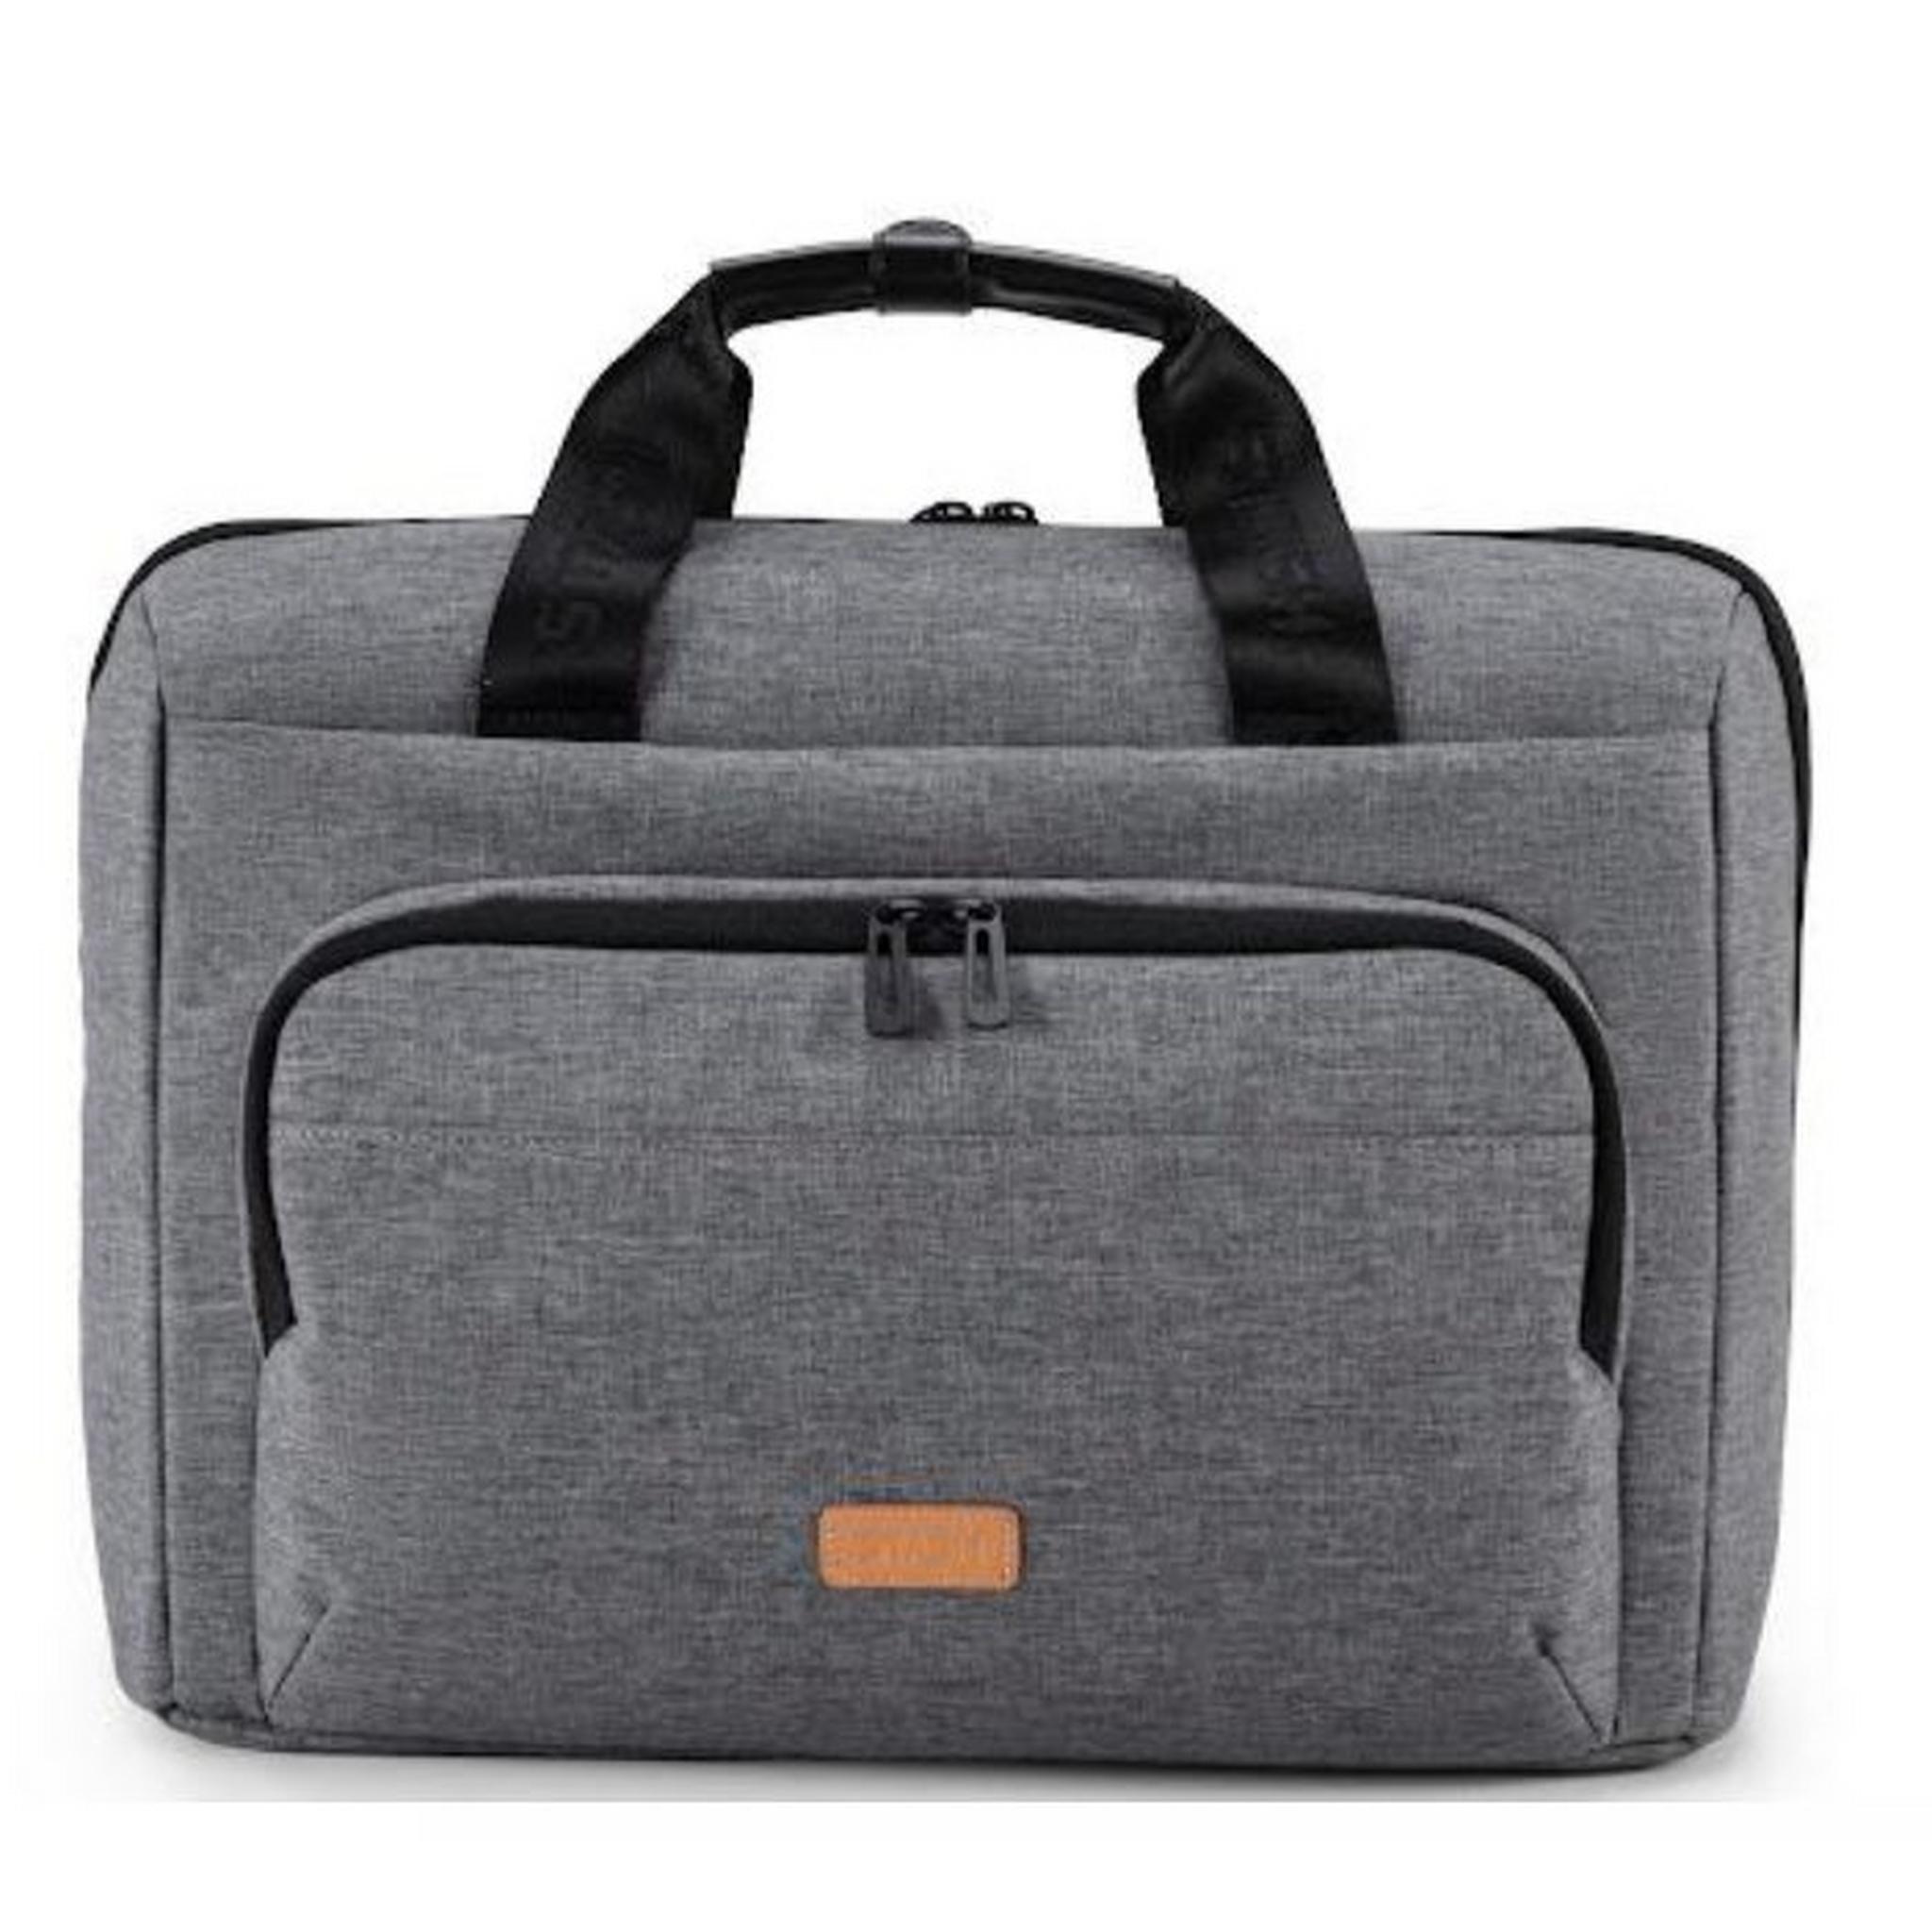 Stash Laptop 15.6-inch Top Loader, K9944W-G – Grey